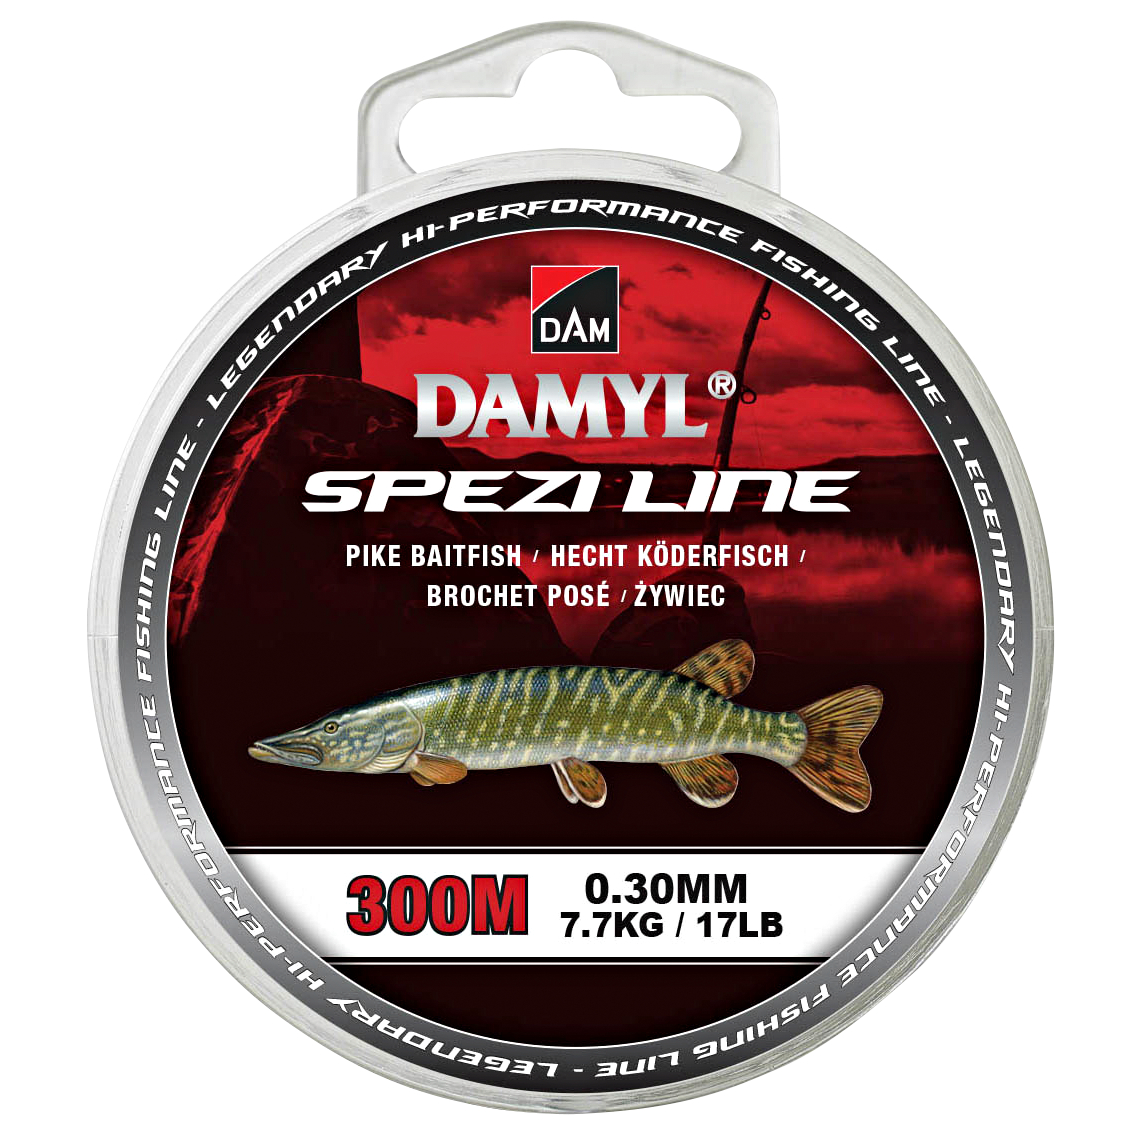 DAM Fishing Line Damyl Spezi Pike Live Bait (dark grey) at low prices